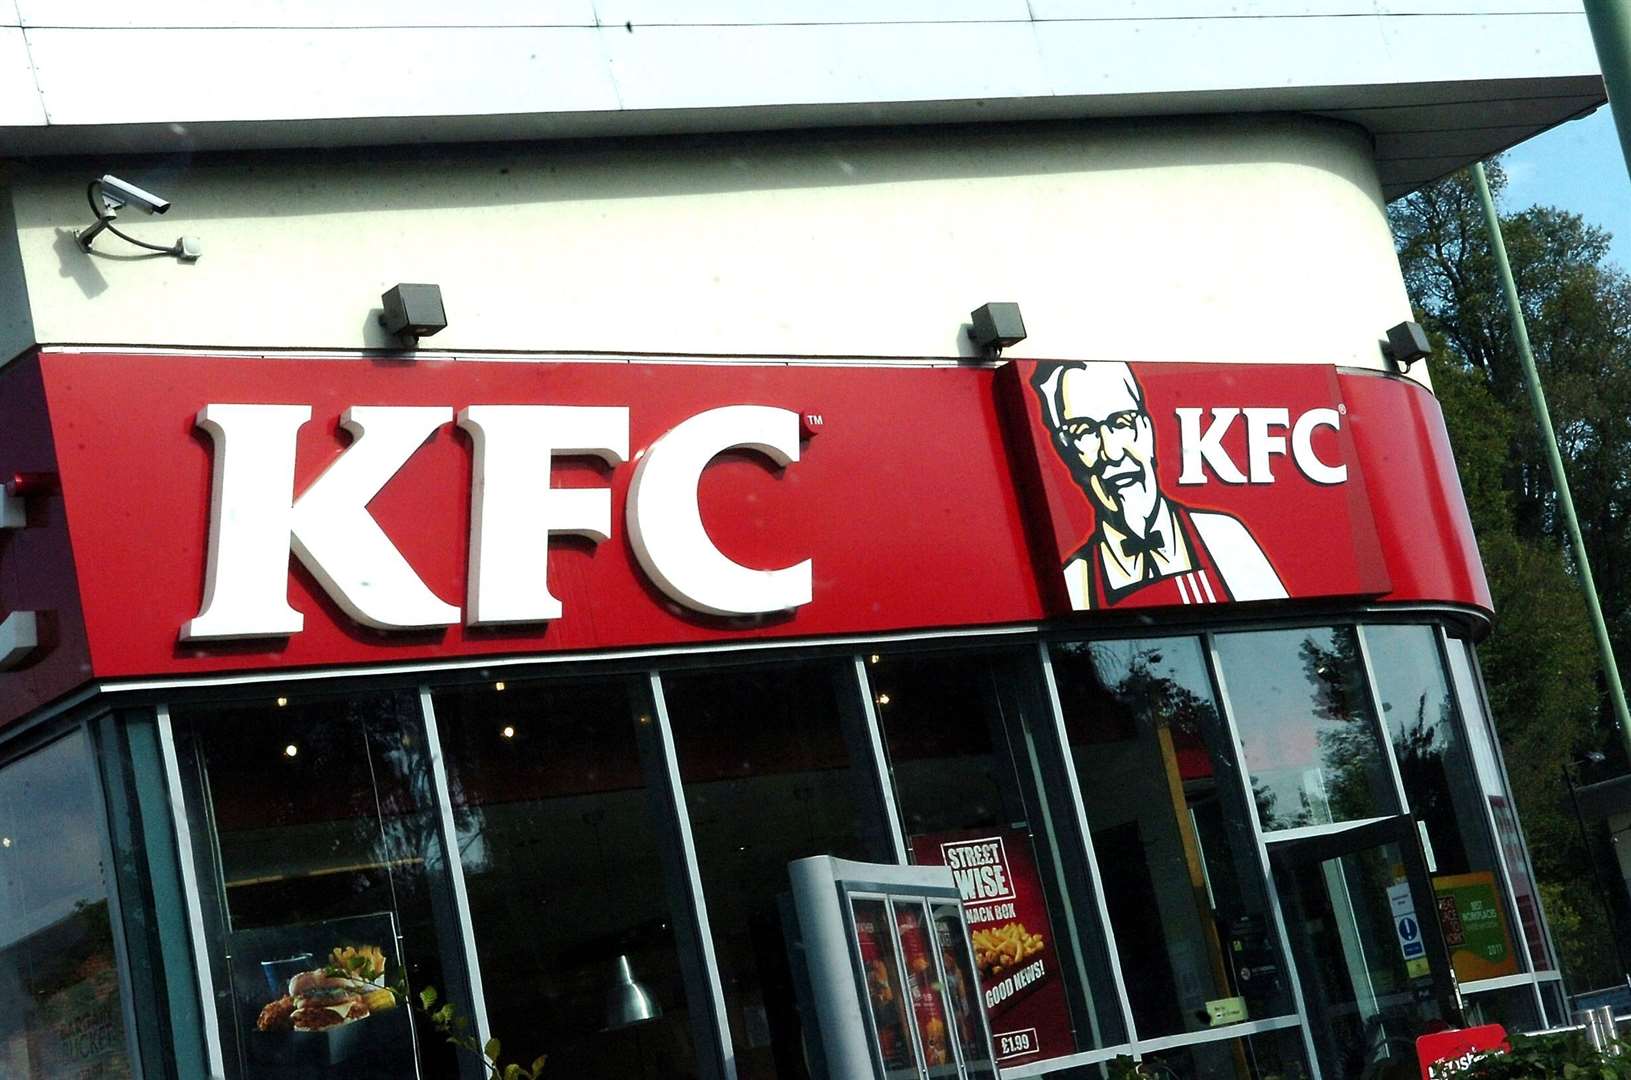 They had a row inside a local KFC